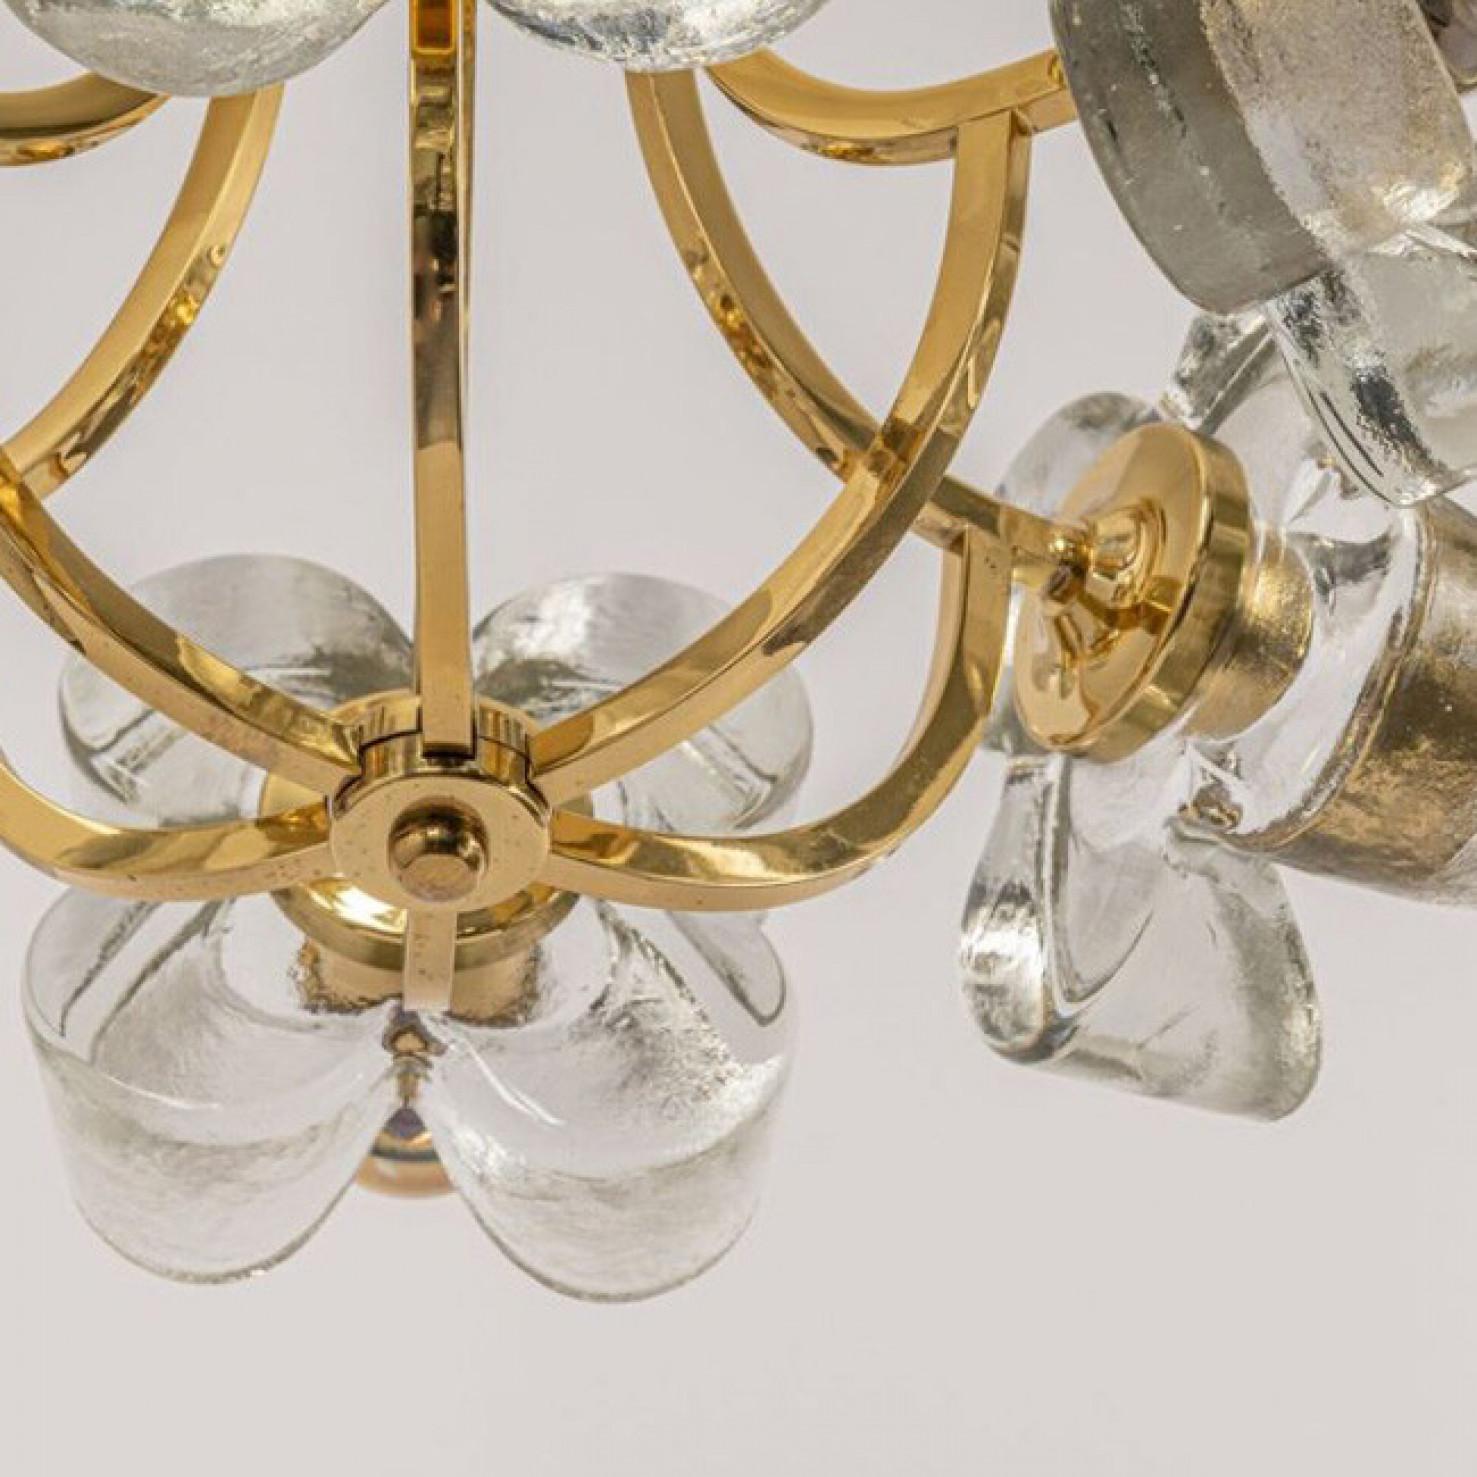 1 of 2 Sische Glass and Brass Chandelier, 1960s Modernist Design, Kalmar Style For Sale 1